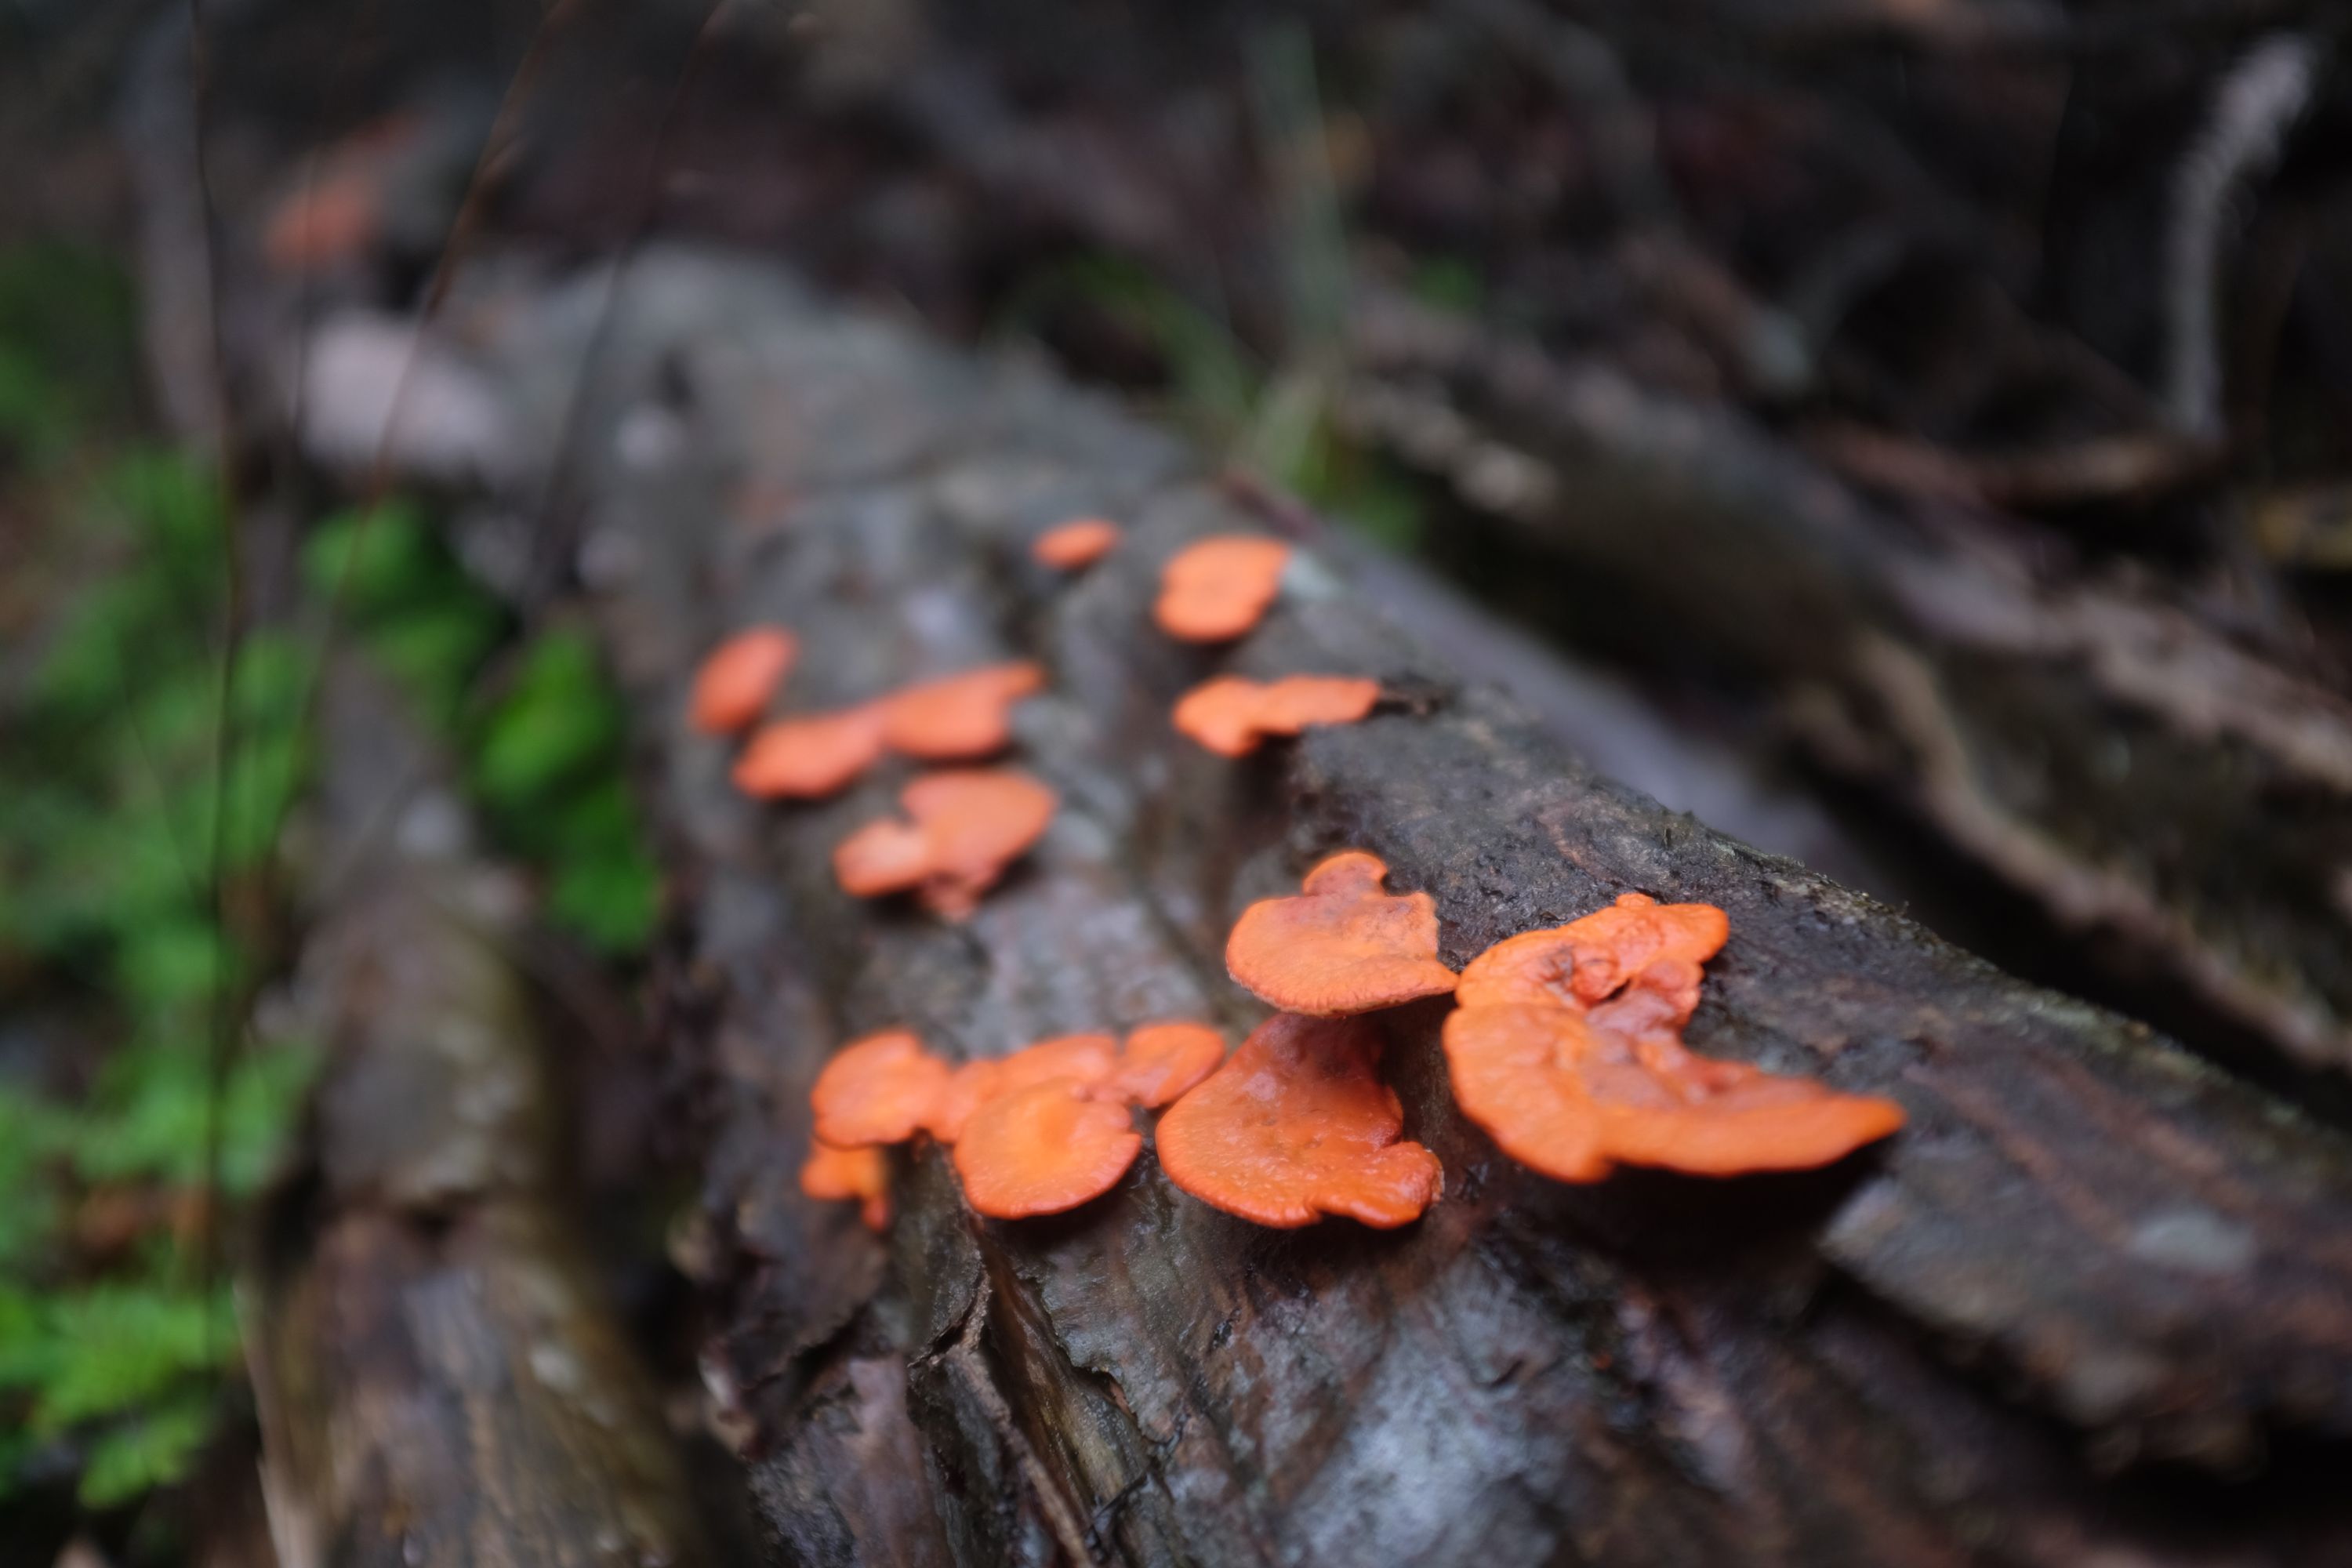 Bright orange fungi growing on a tree trunk.